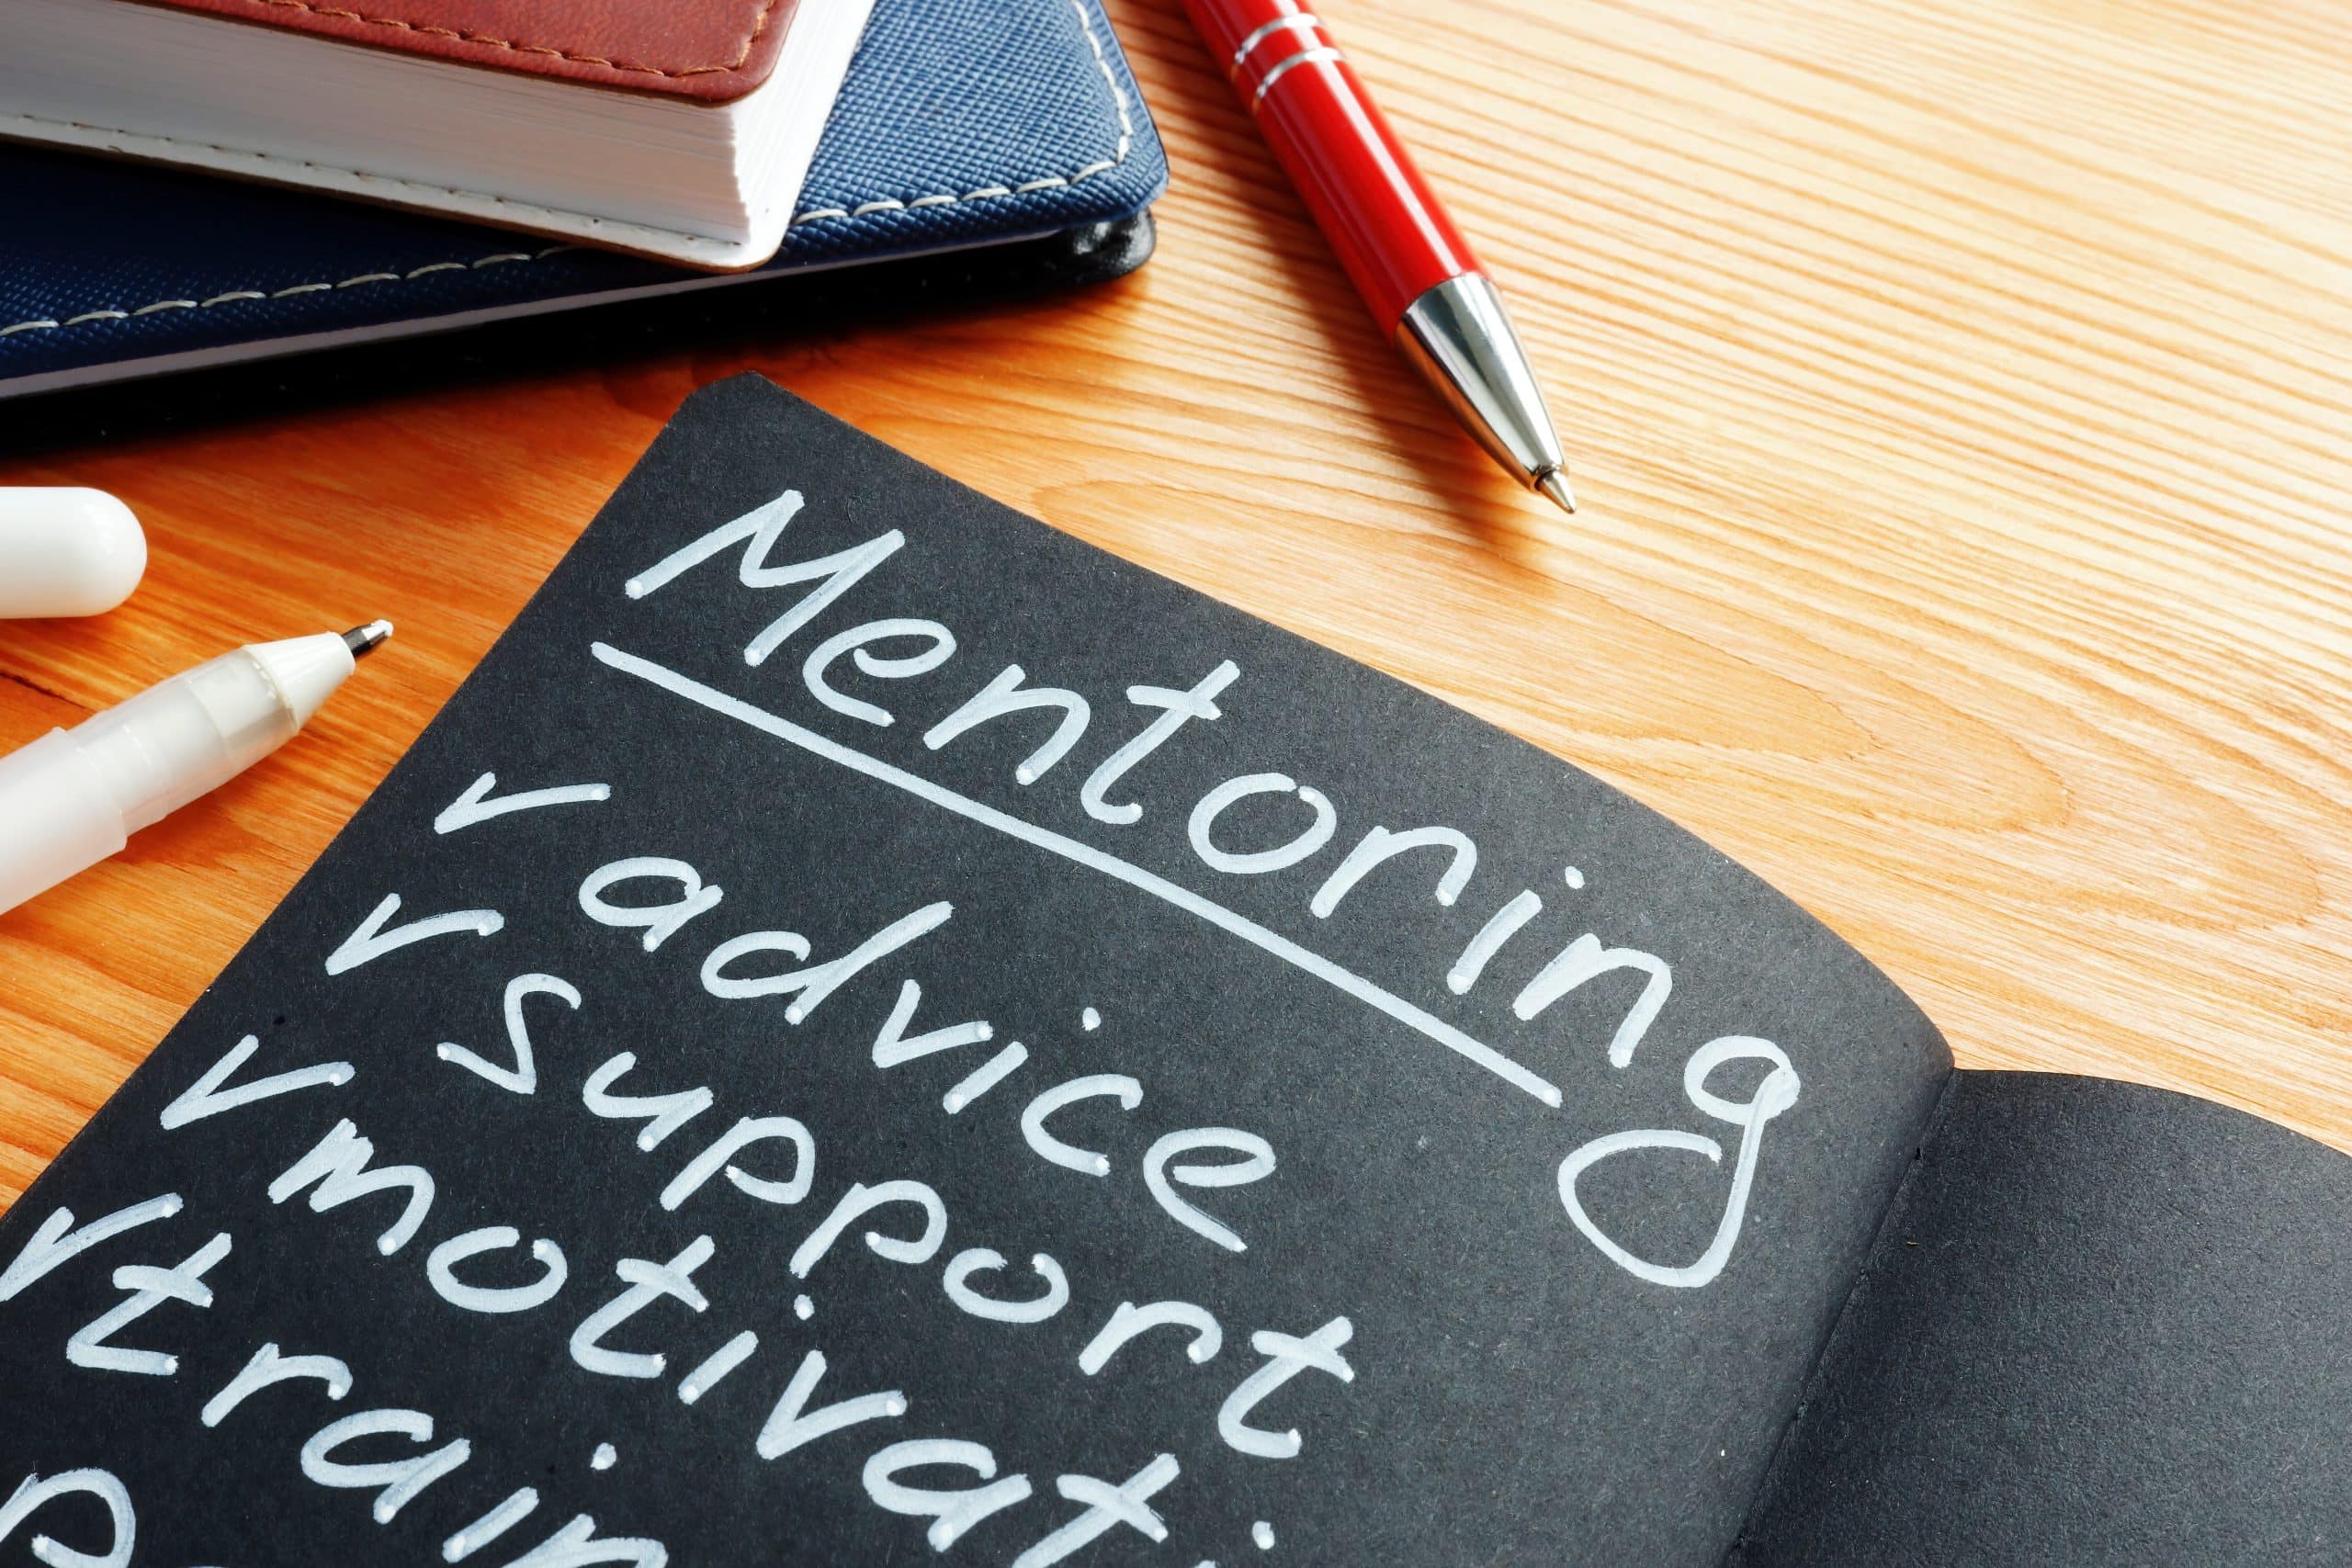 How to Start a Mentoring Program